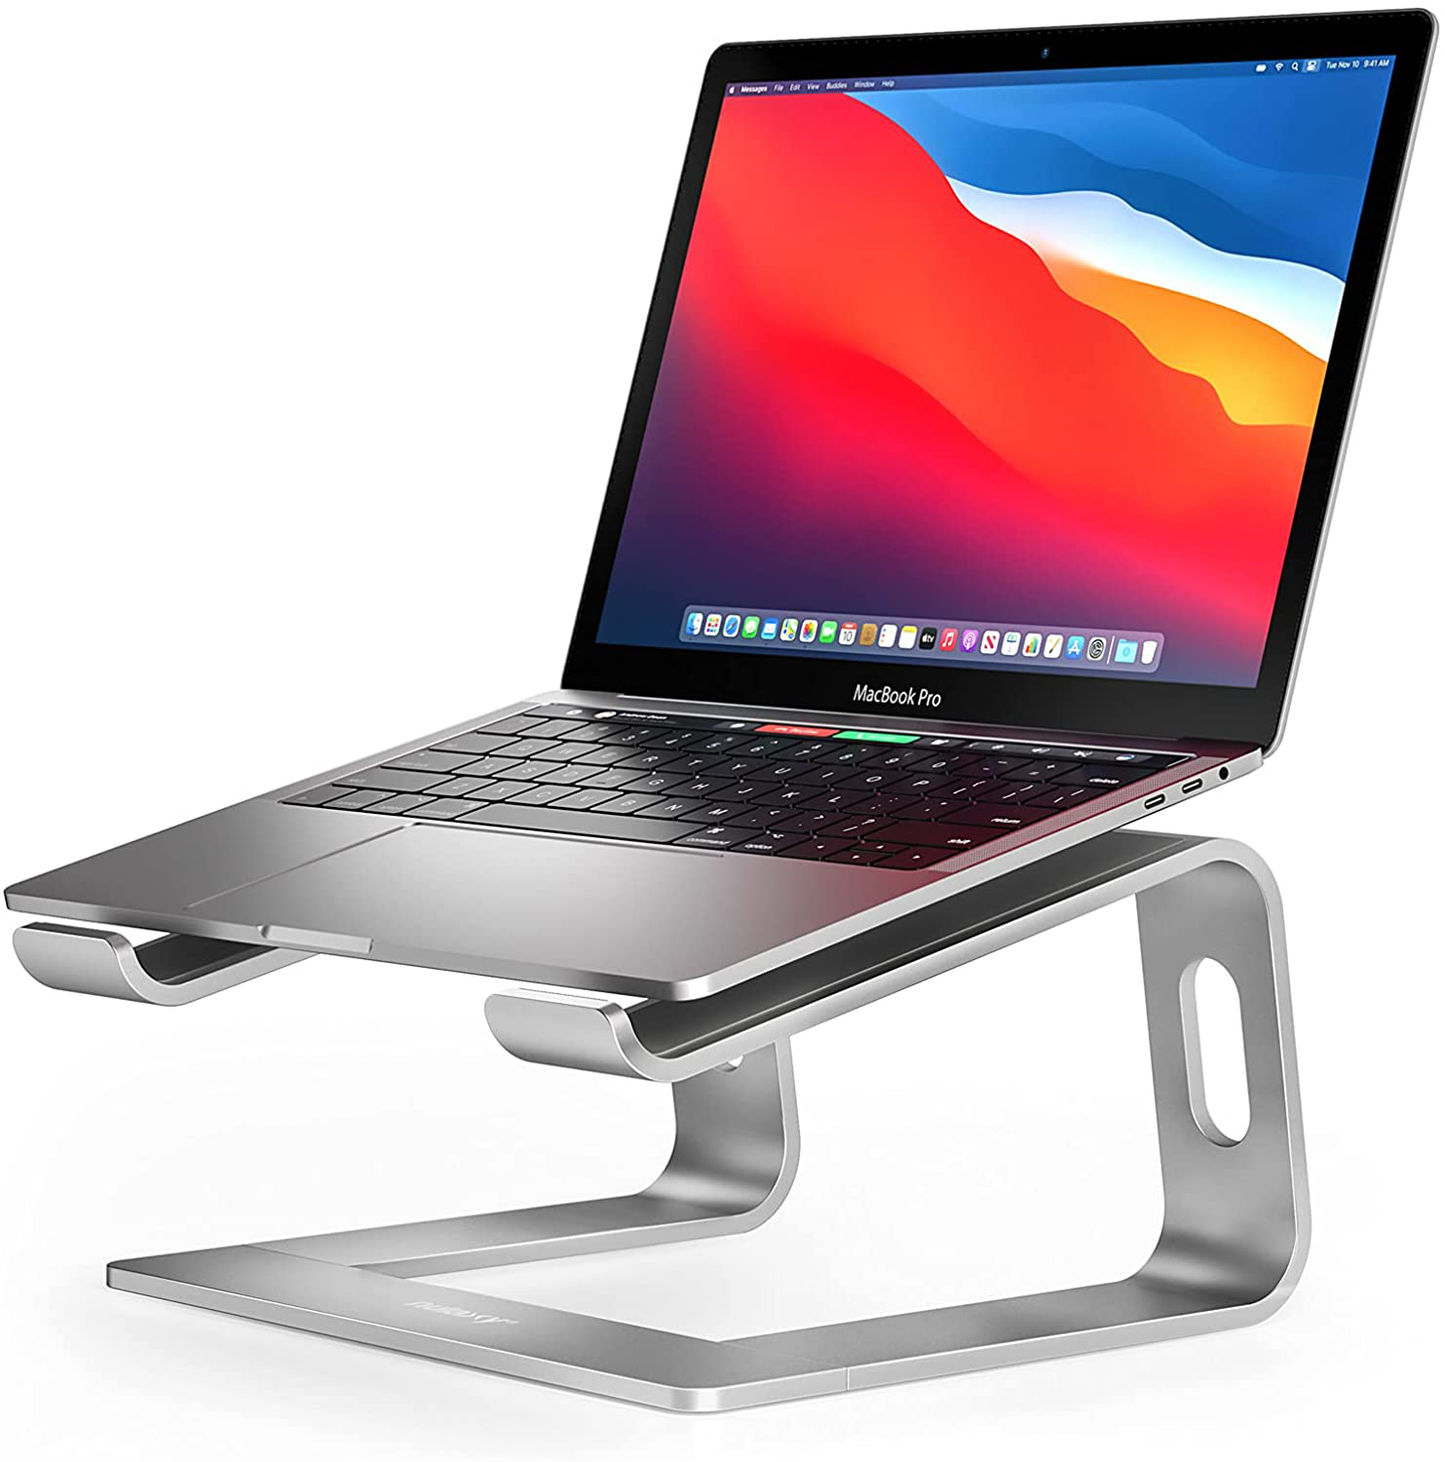 Ergonomic Aluminum Laptop Mount Computer Stand for Desk, Detachable Laptop Riser Notebook Stand Compatible with MacBook Air Pro, Dell XPS, More 10-16" Laptops